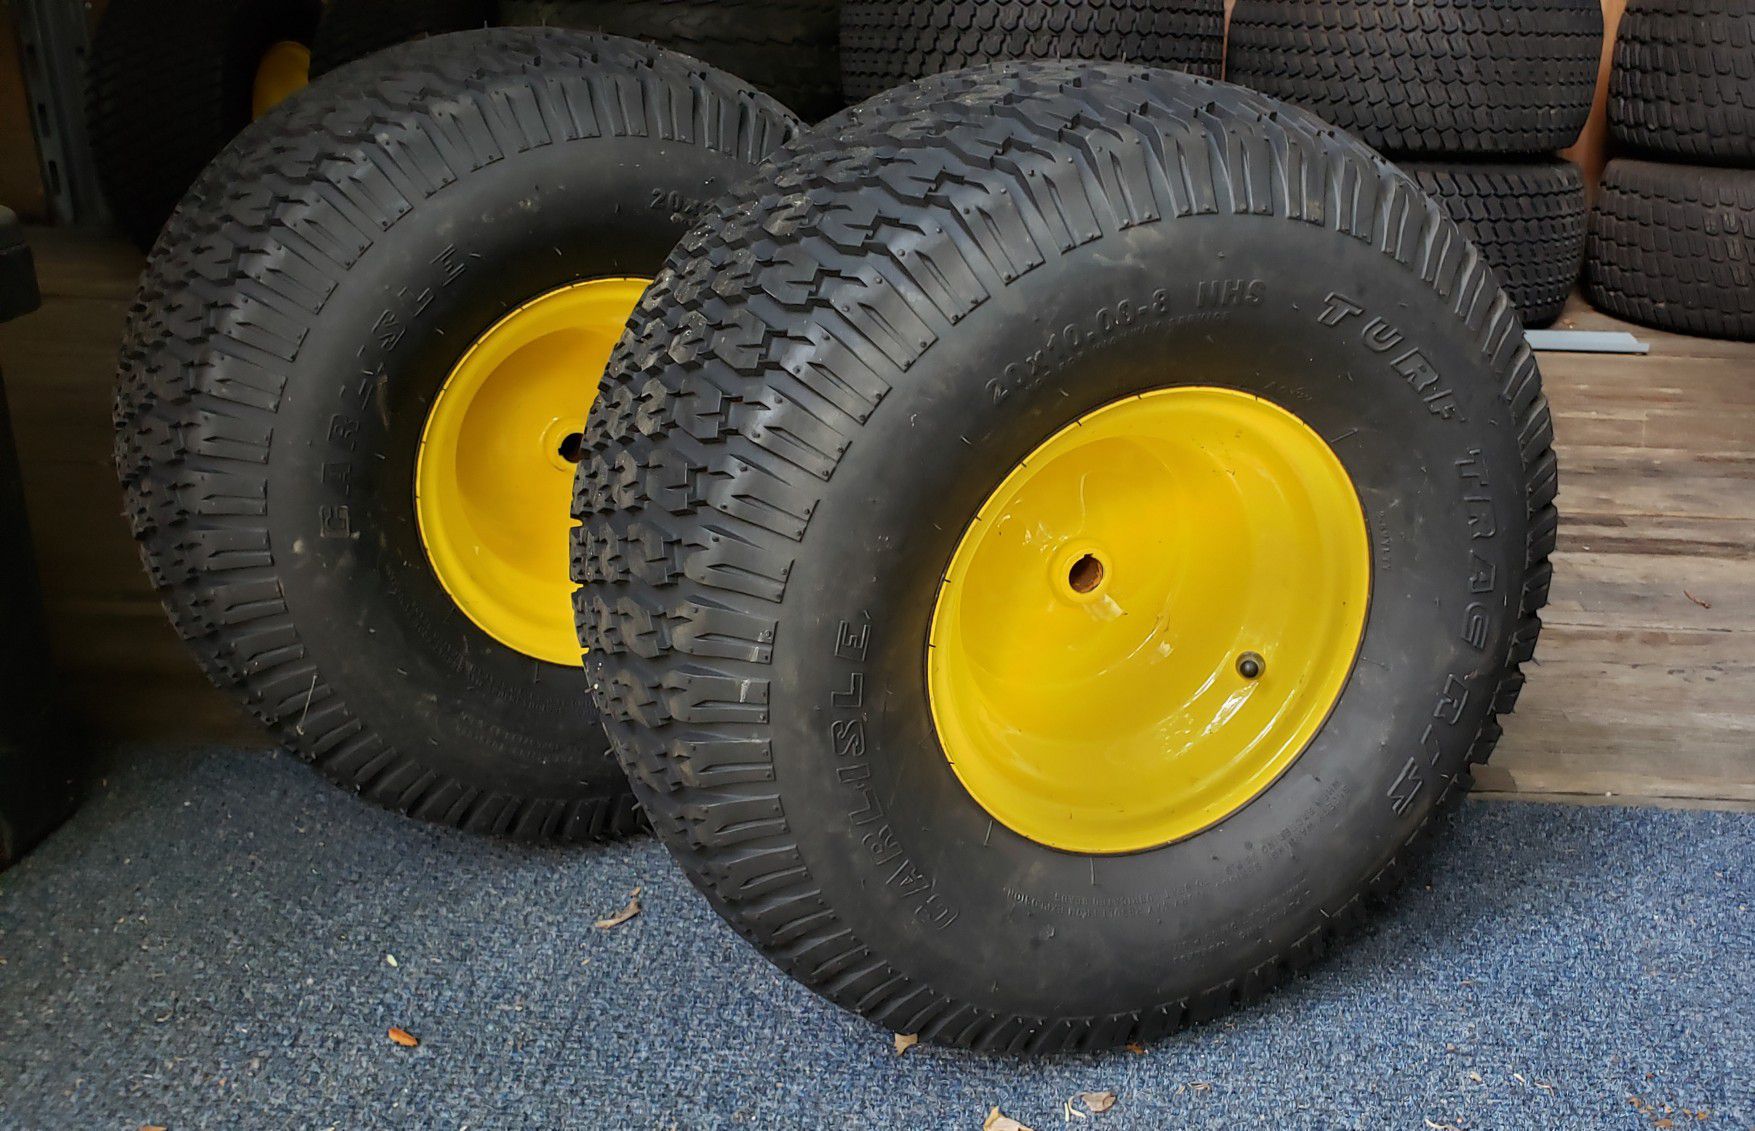 Pair of 20x10-8 Carlilse TurfTrac R/S 2 ply lawn mower tires on JD yellow wheel